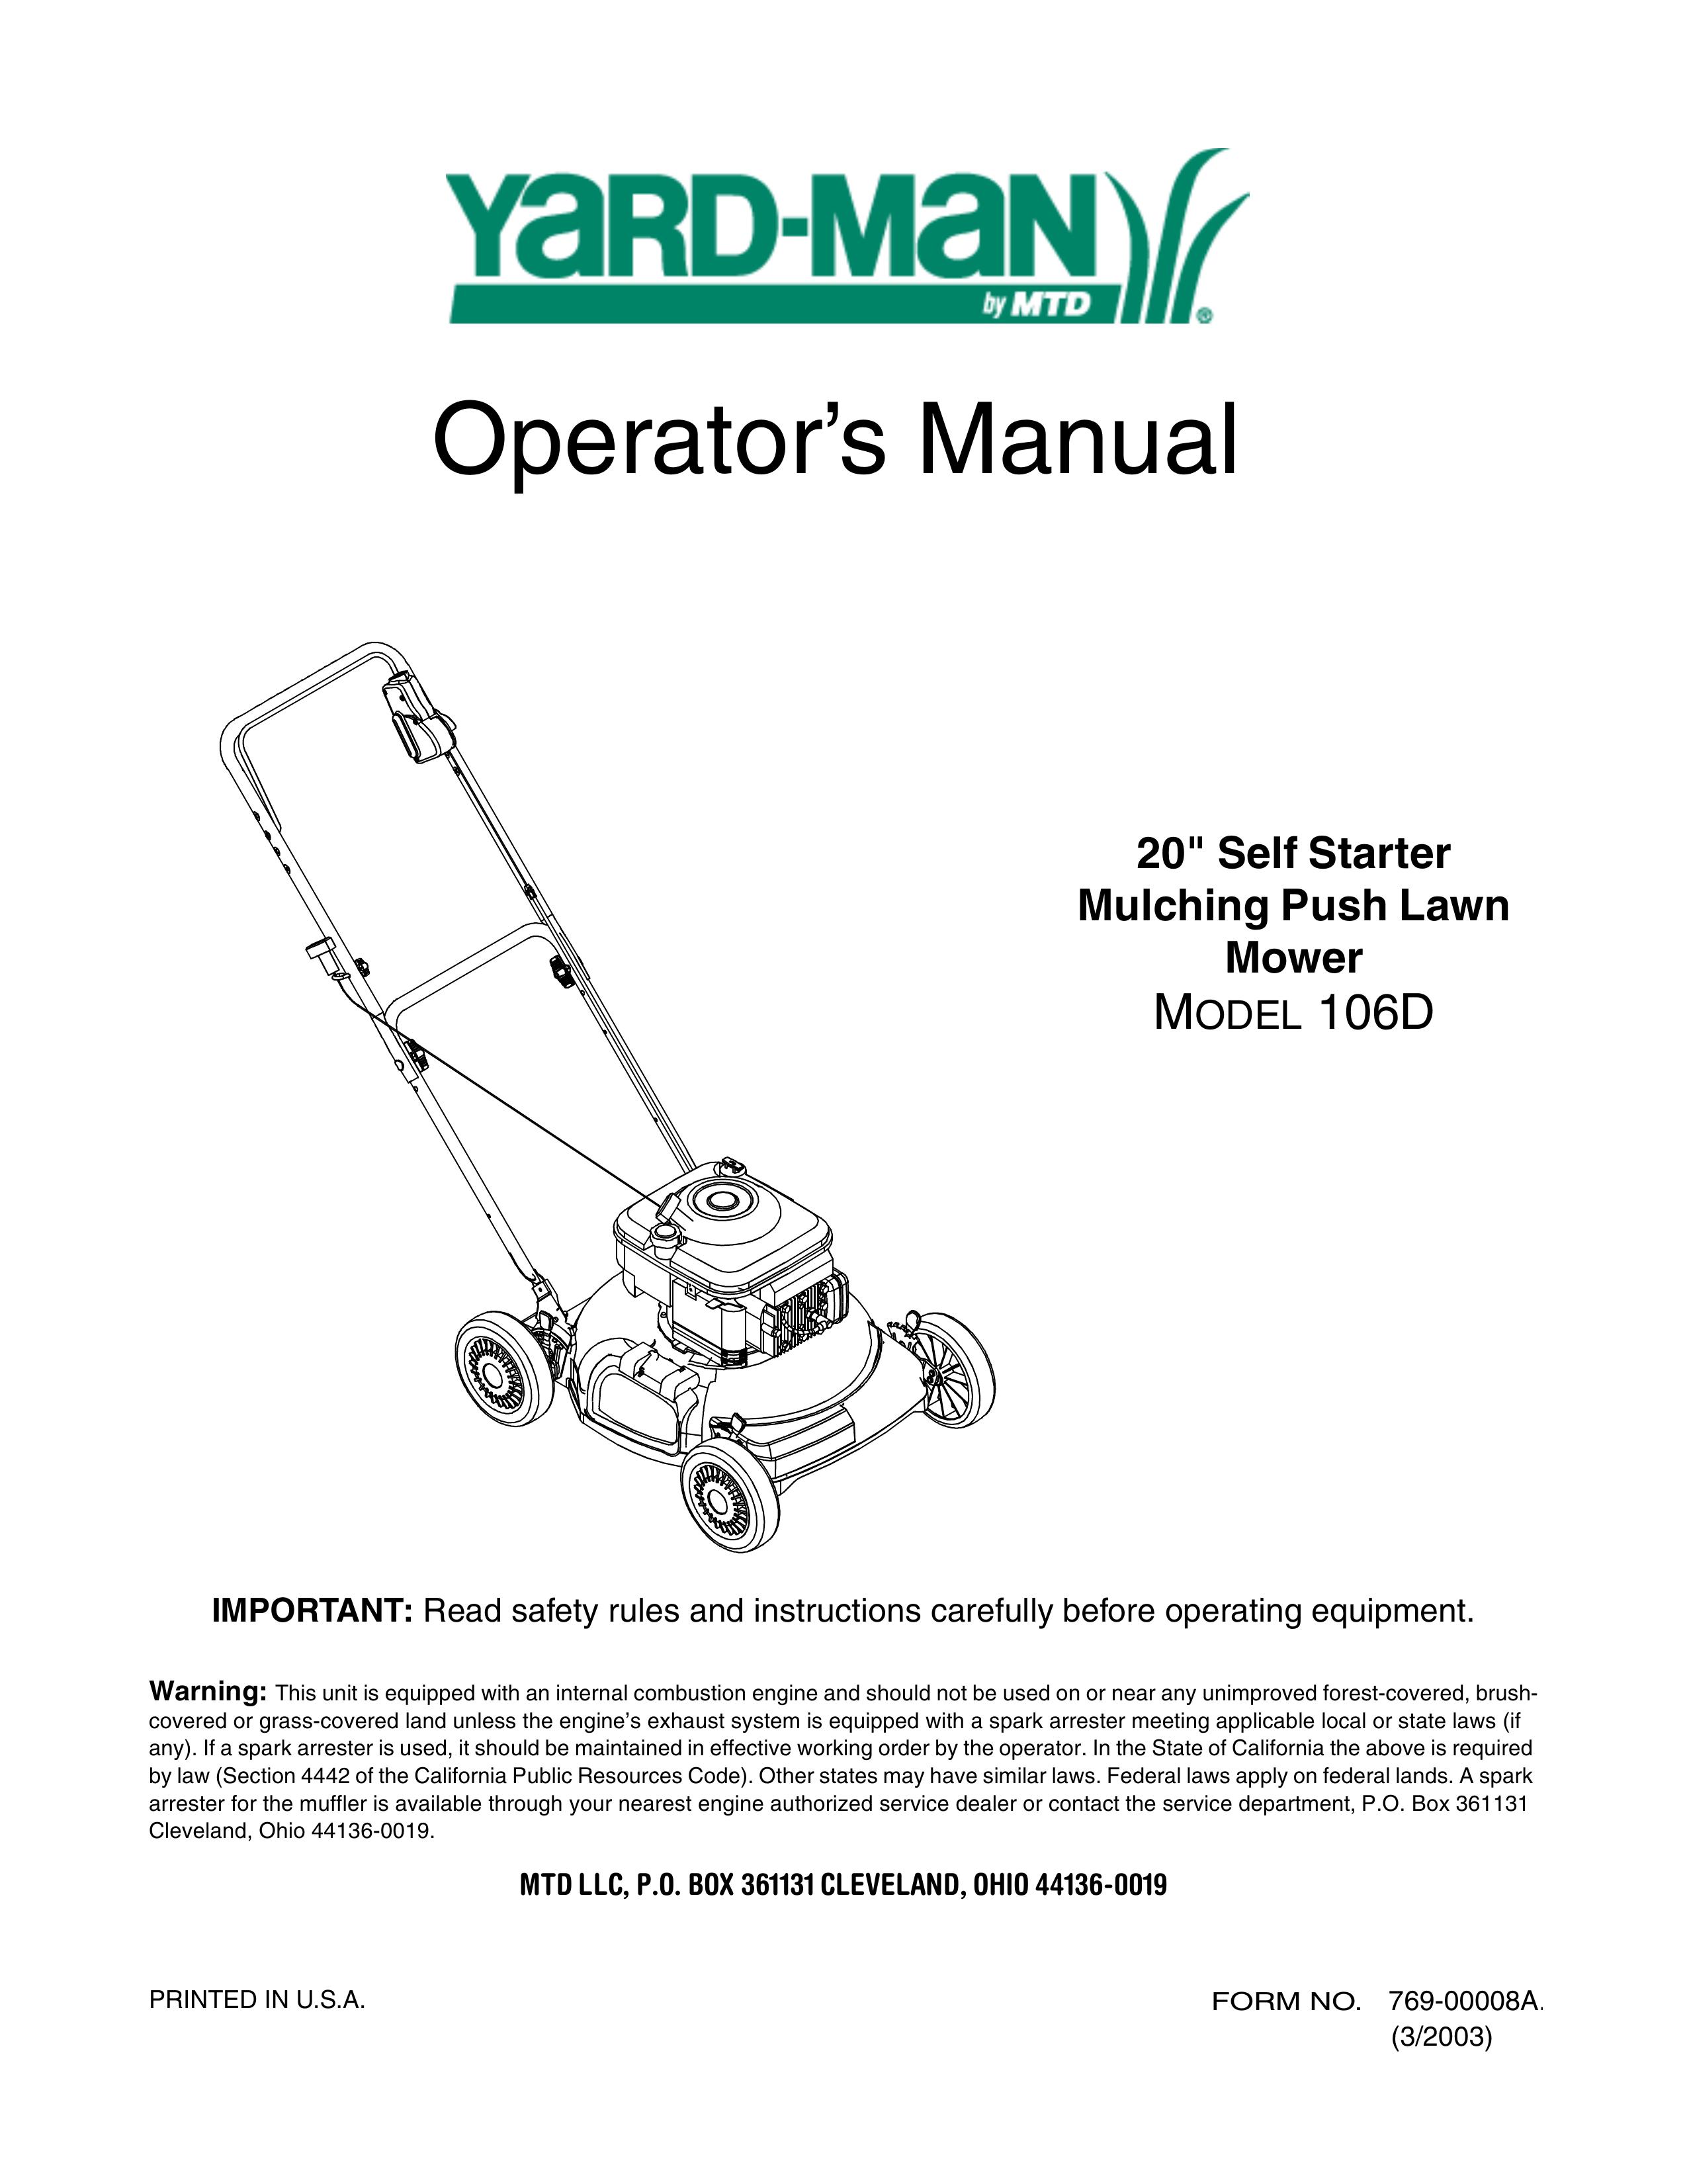 Yard-Man 106D Lawn Mower User Manual